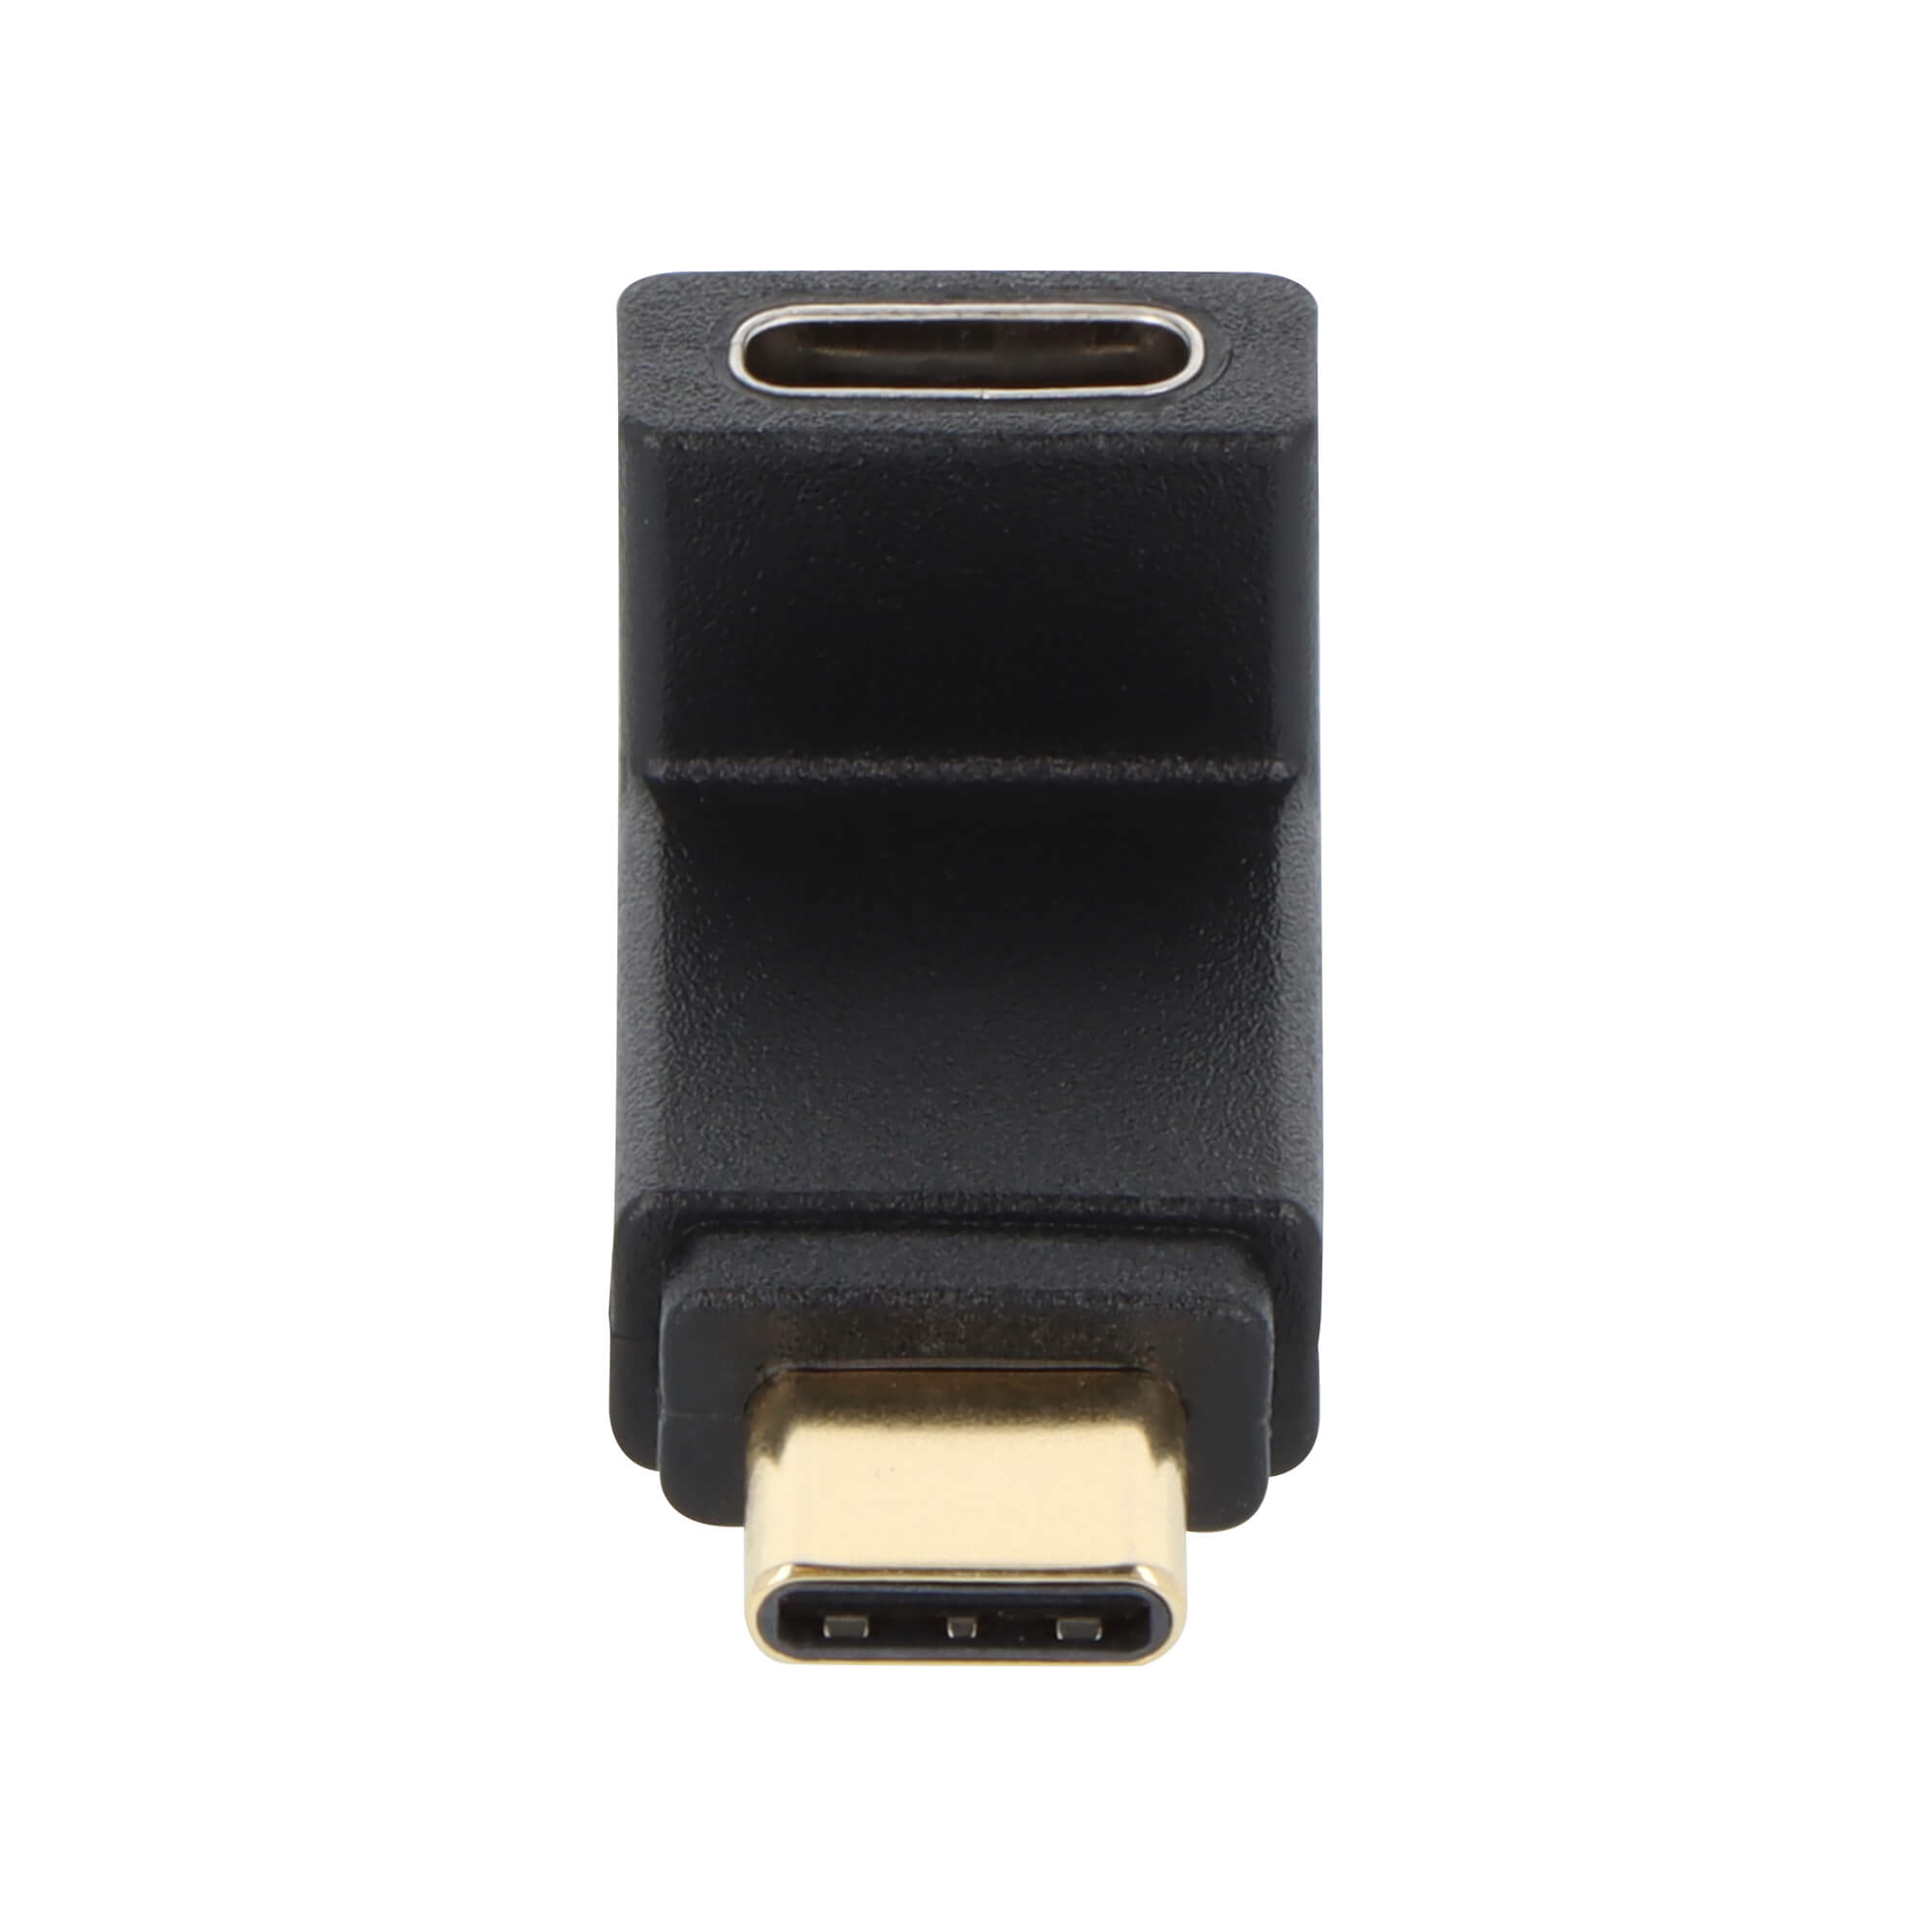 USB-C 90 Degree Angle Adapter